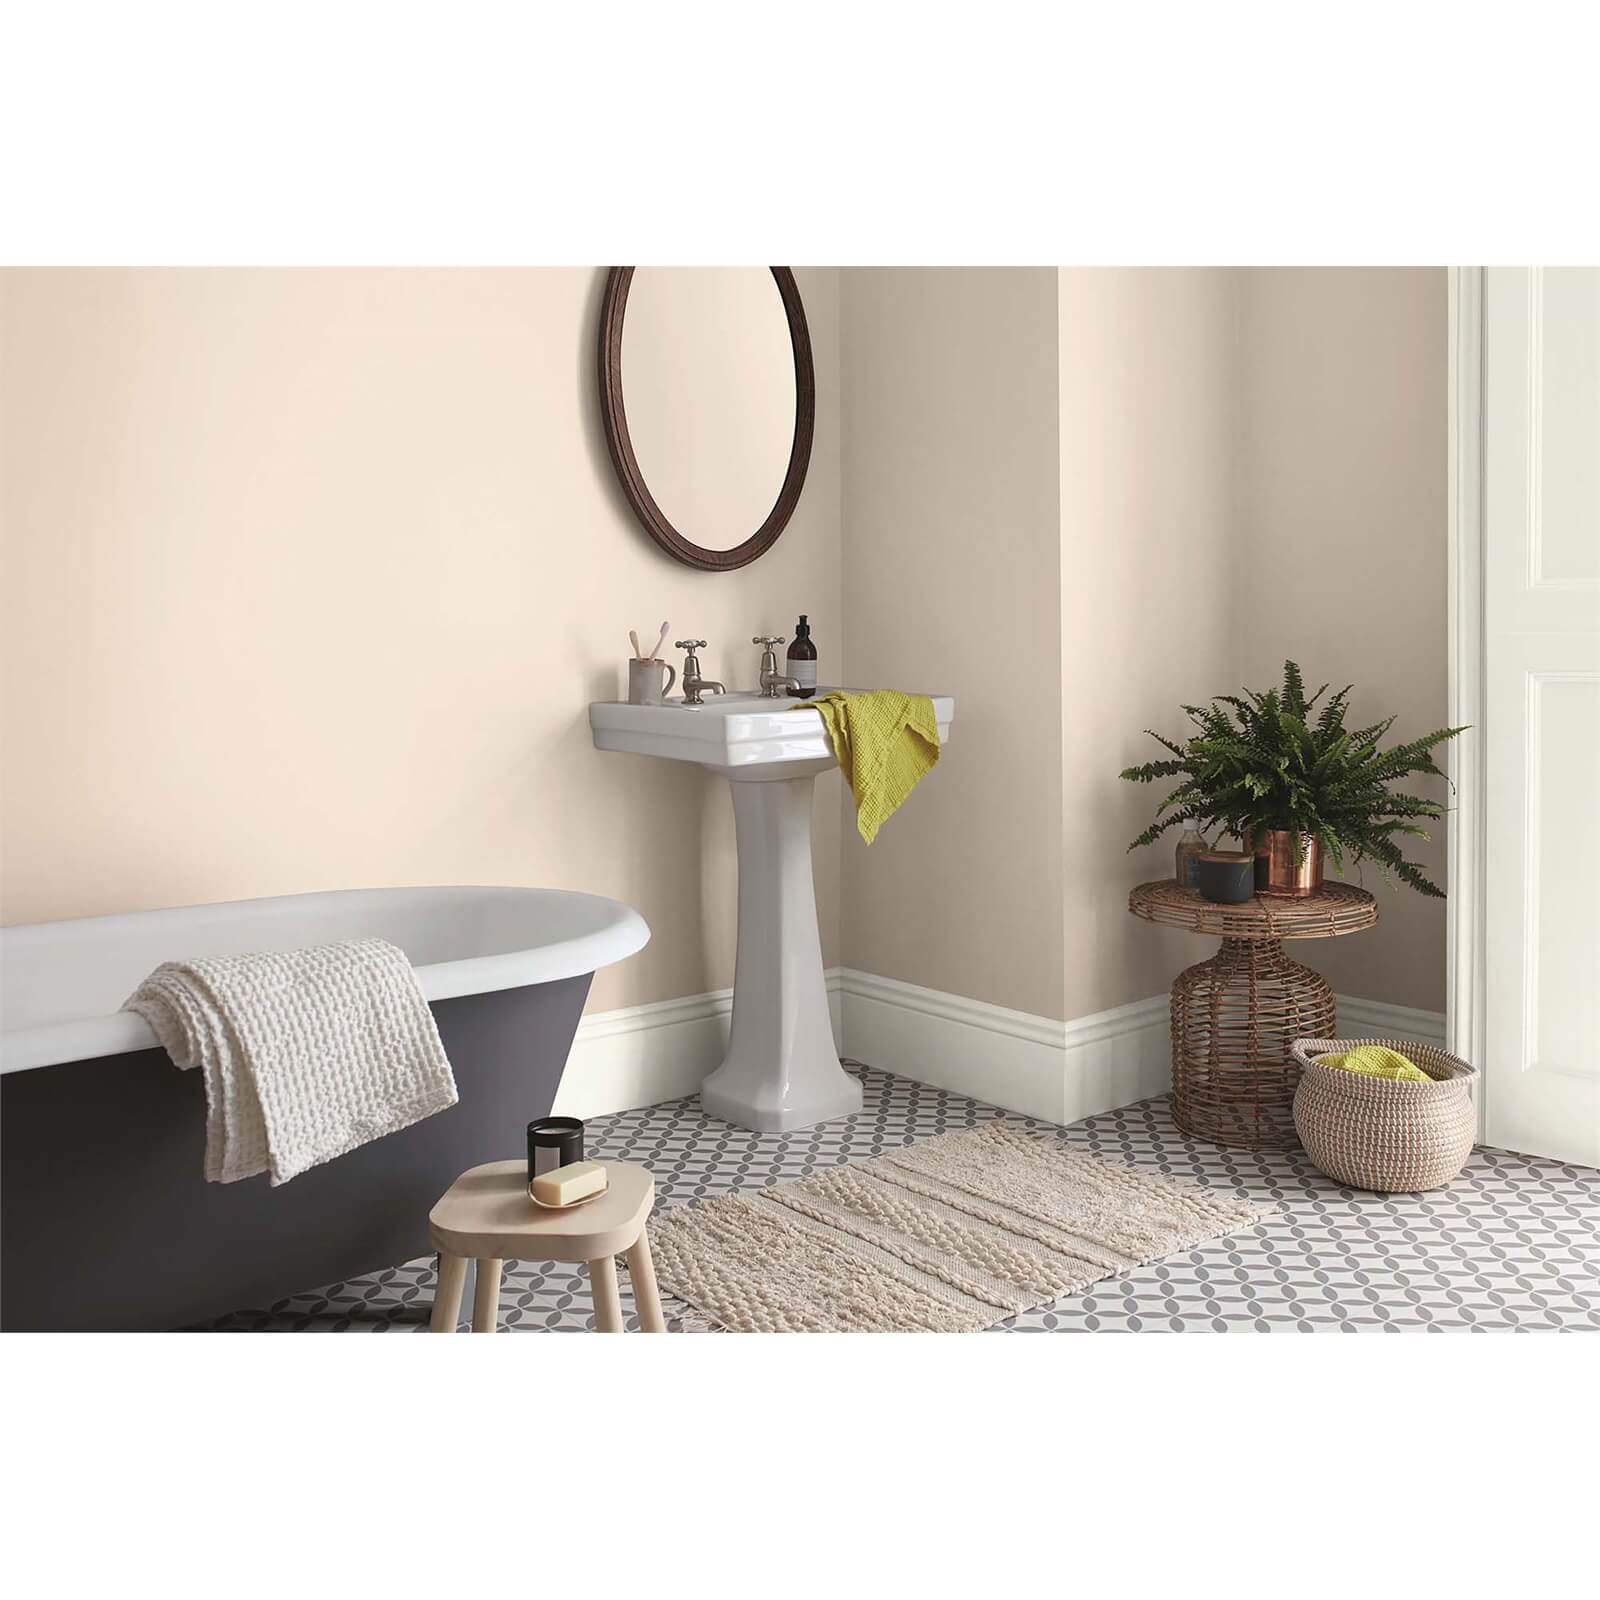 Dulux Easycare Bathroom Summer Linen Tester Paint - 30ml